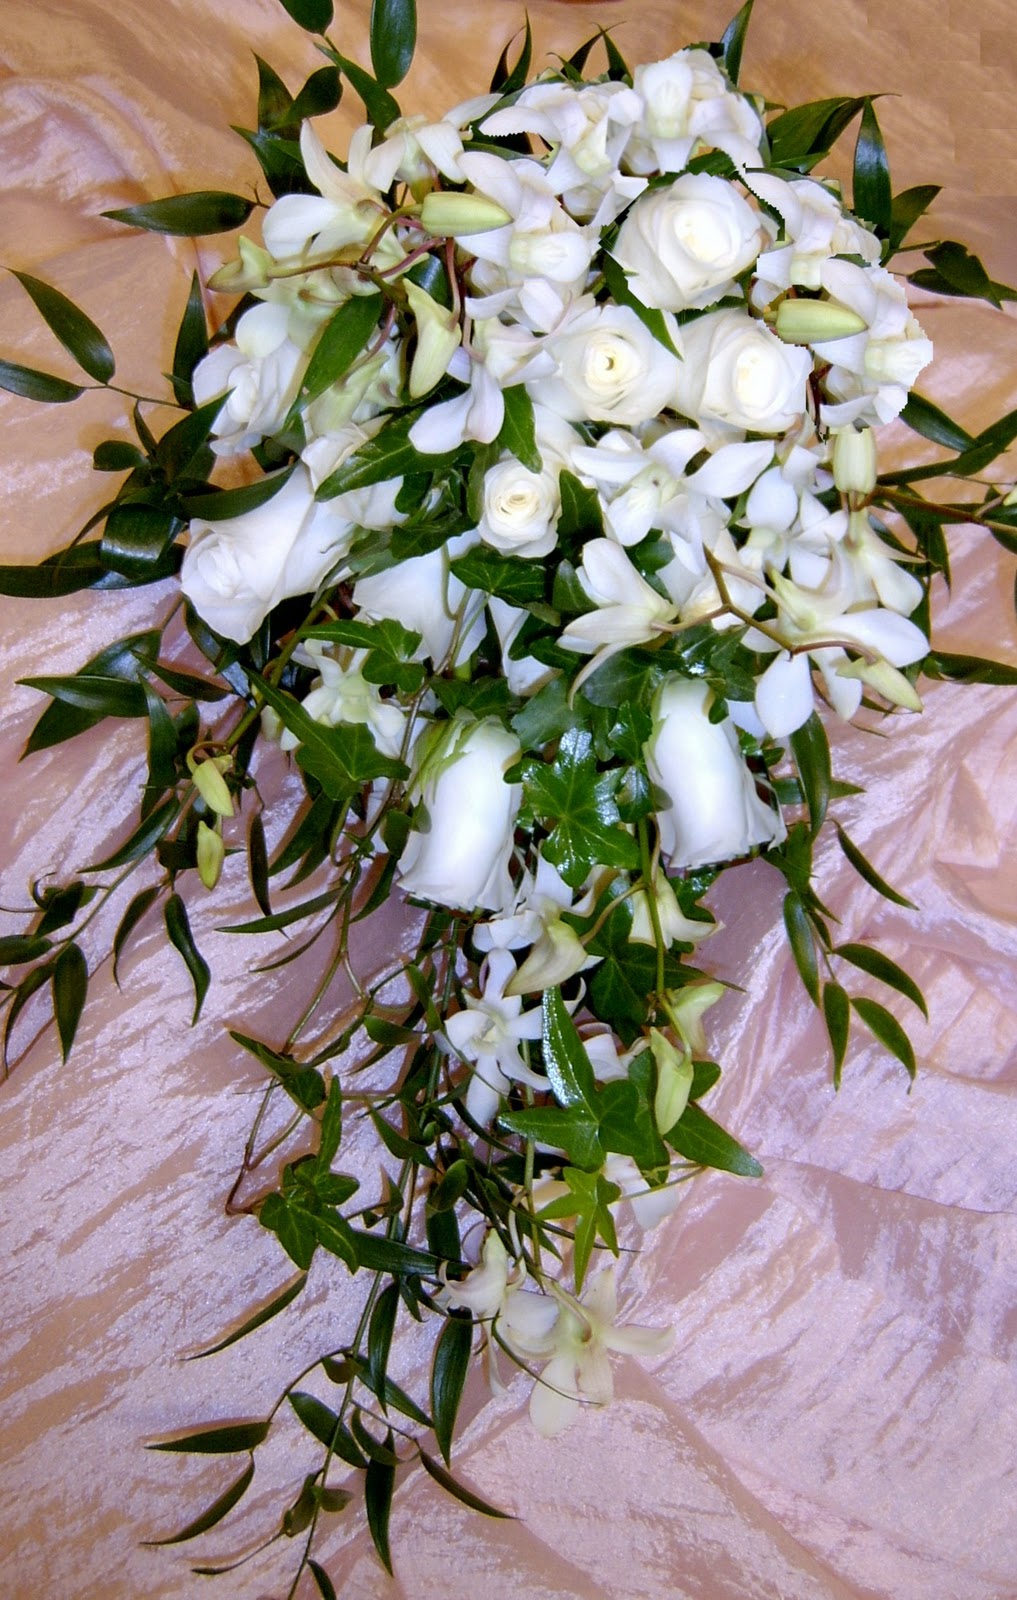 Premium Flowers: The cascade wedding bouquet